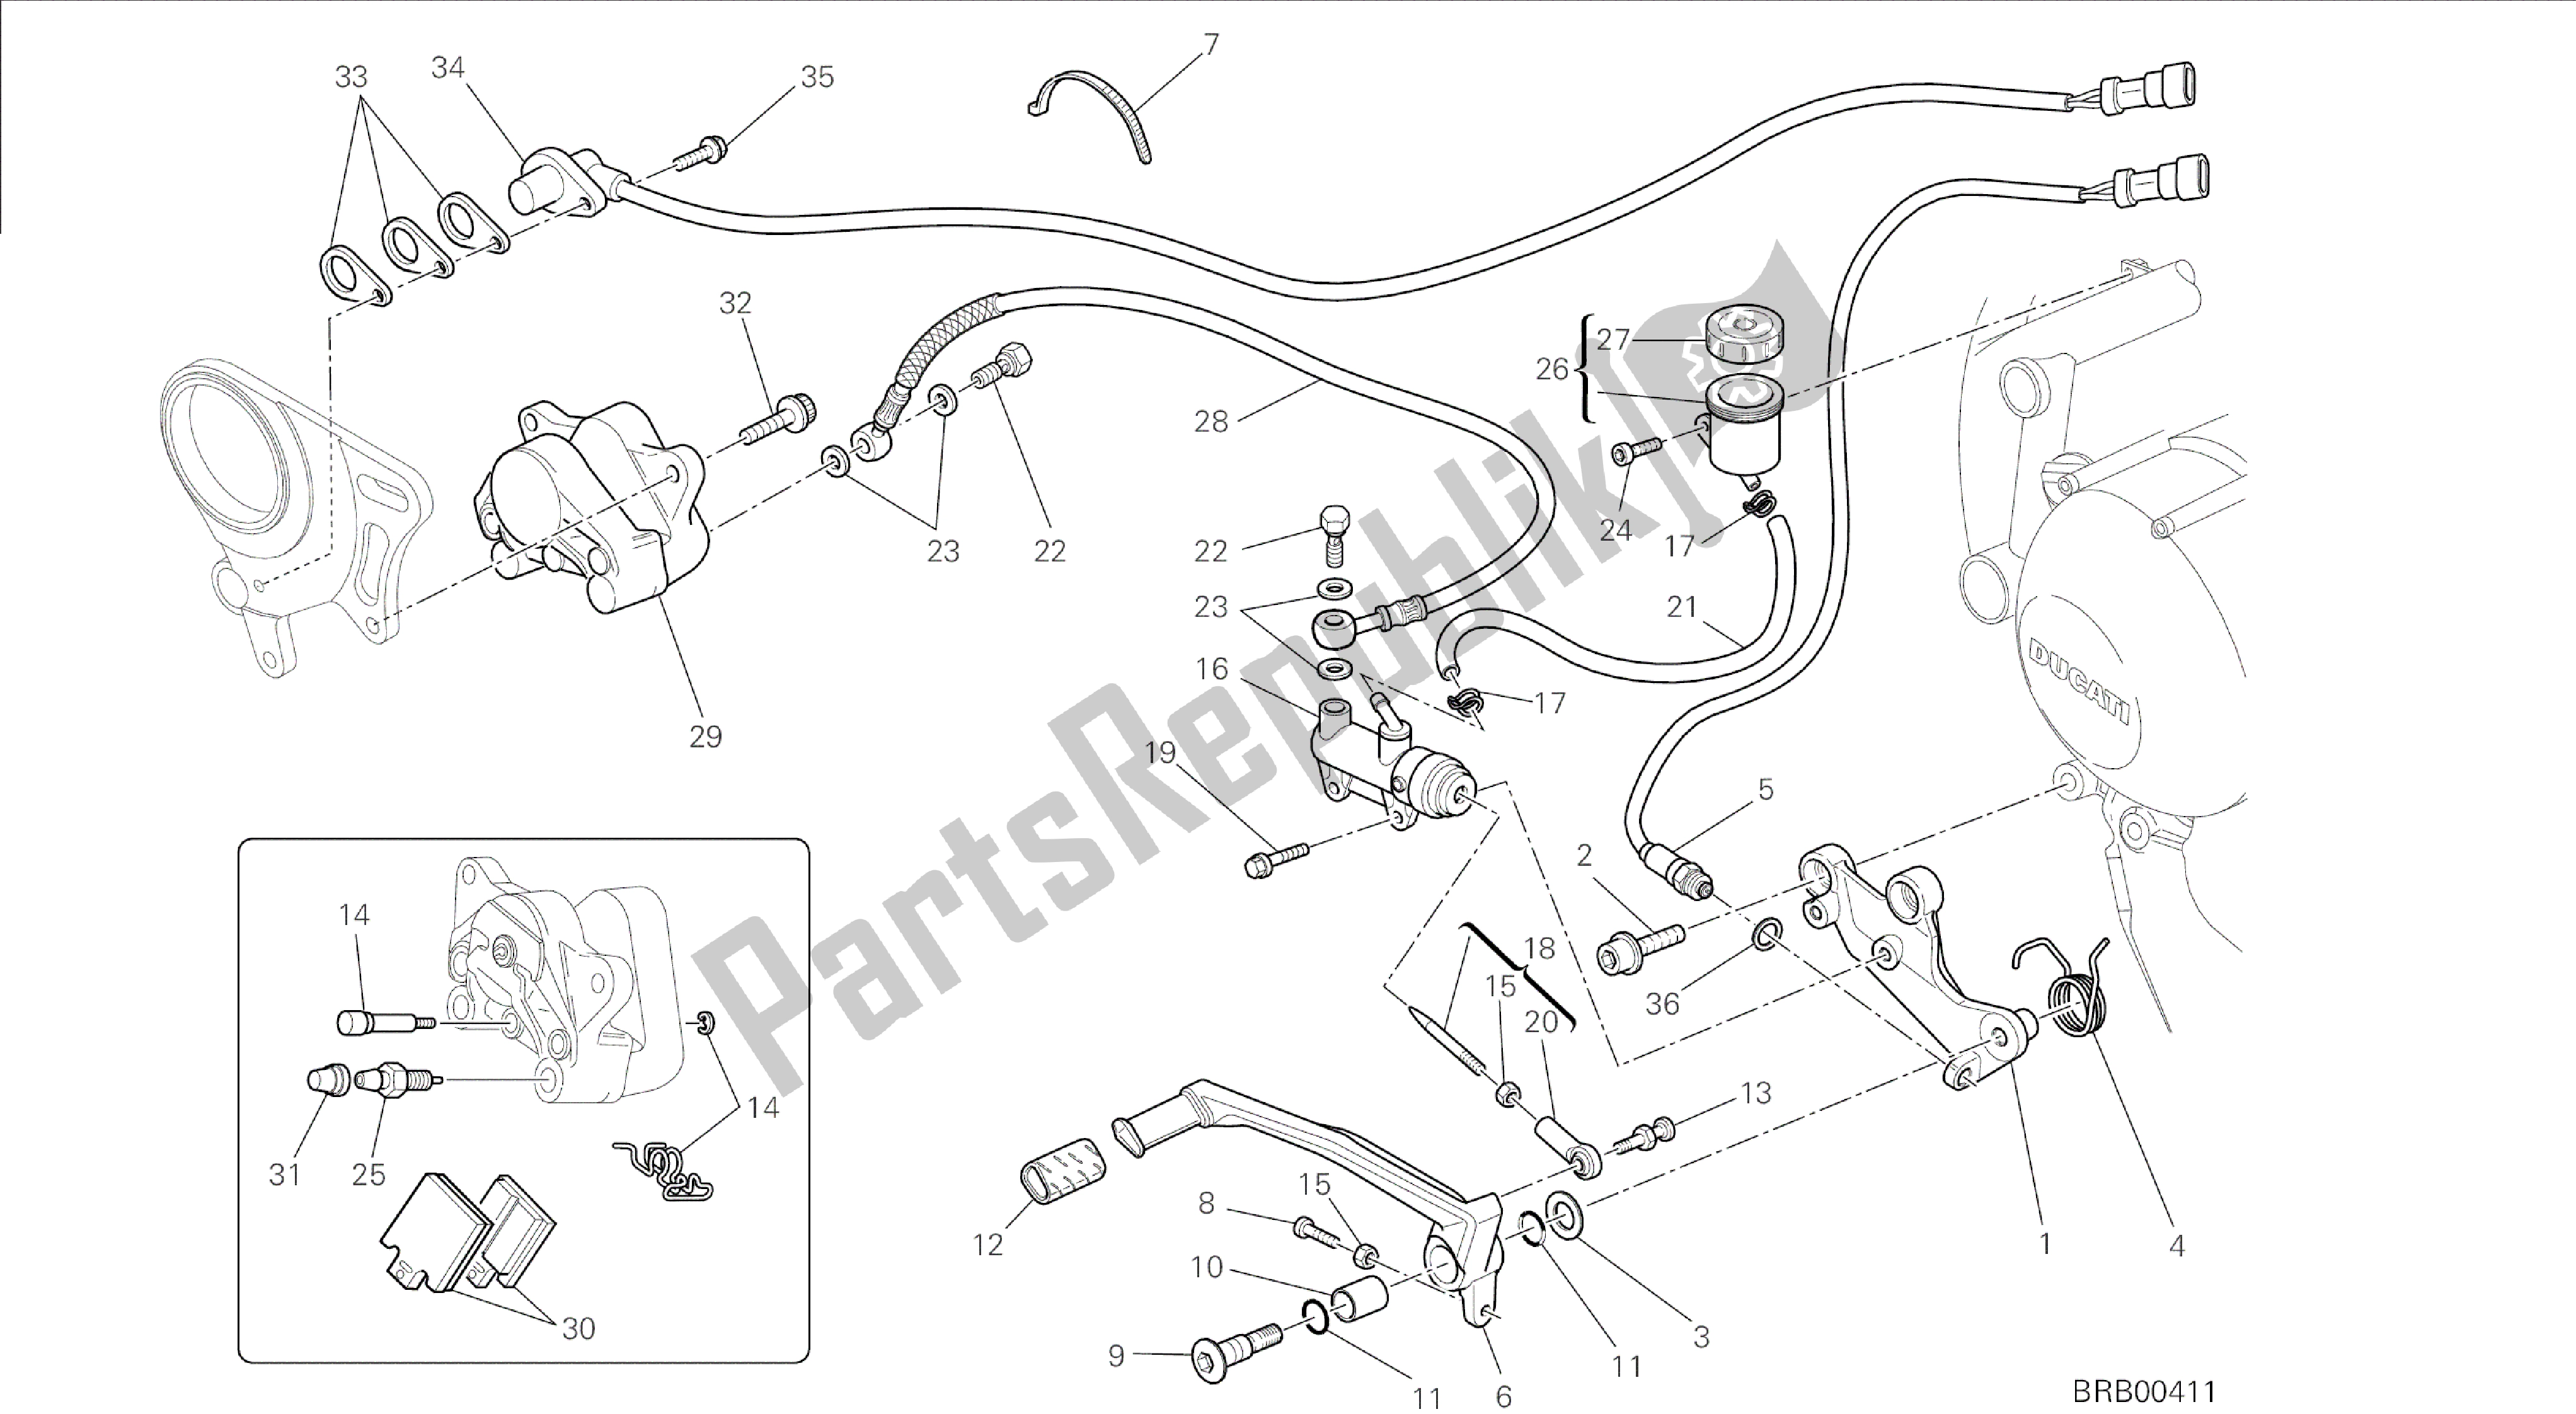 Todas las partes para Dibujo 025 - Sistema De Freno Trasero [mod: F848; Xst: Marco De Grupo Aus, Bra, Chn, Eur, Fra, Jap, Tha] de Ducati Streetfighter 848 2014